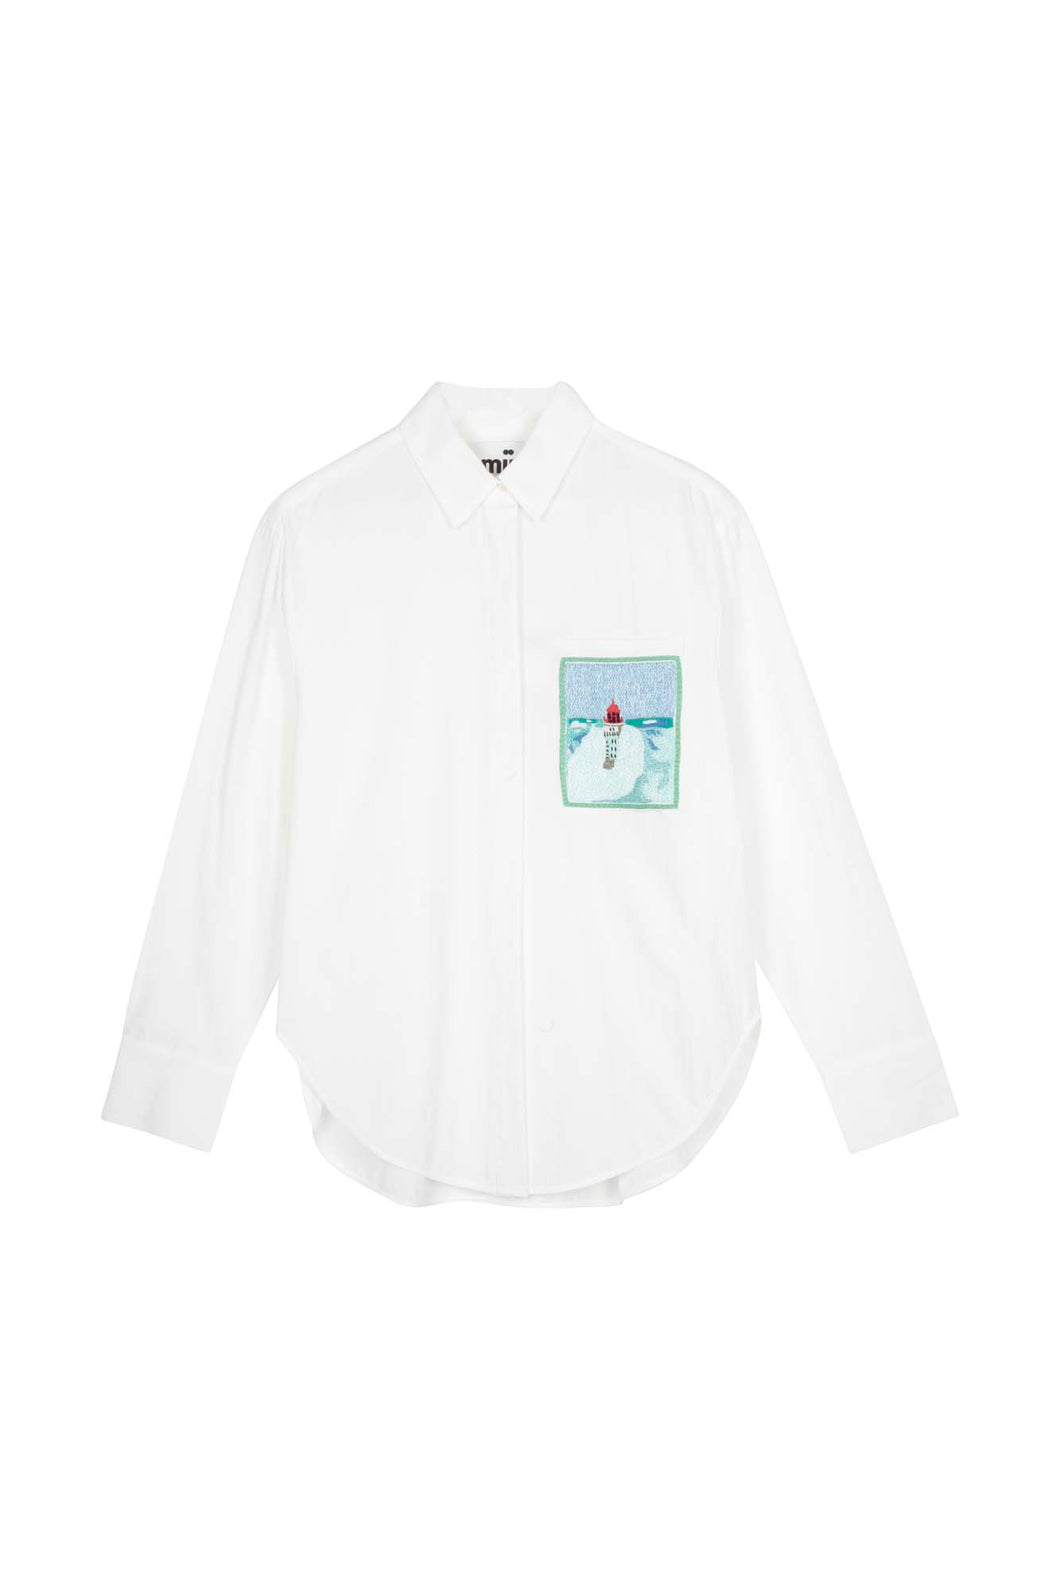 Mii Milou Bretagne Shirt - Le Phare